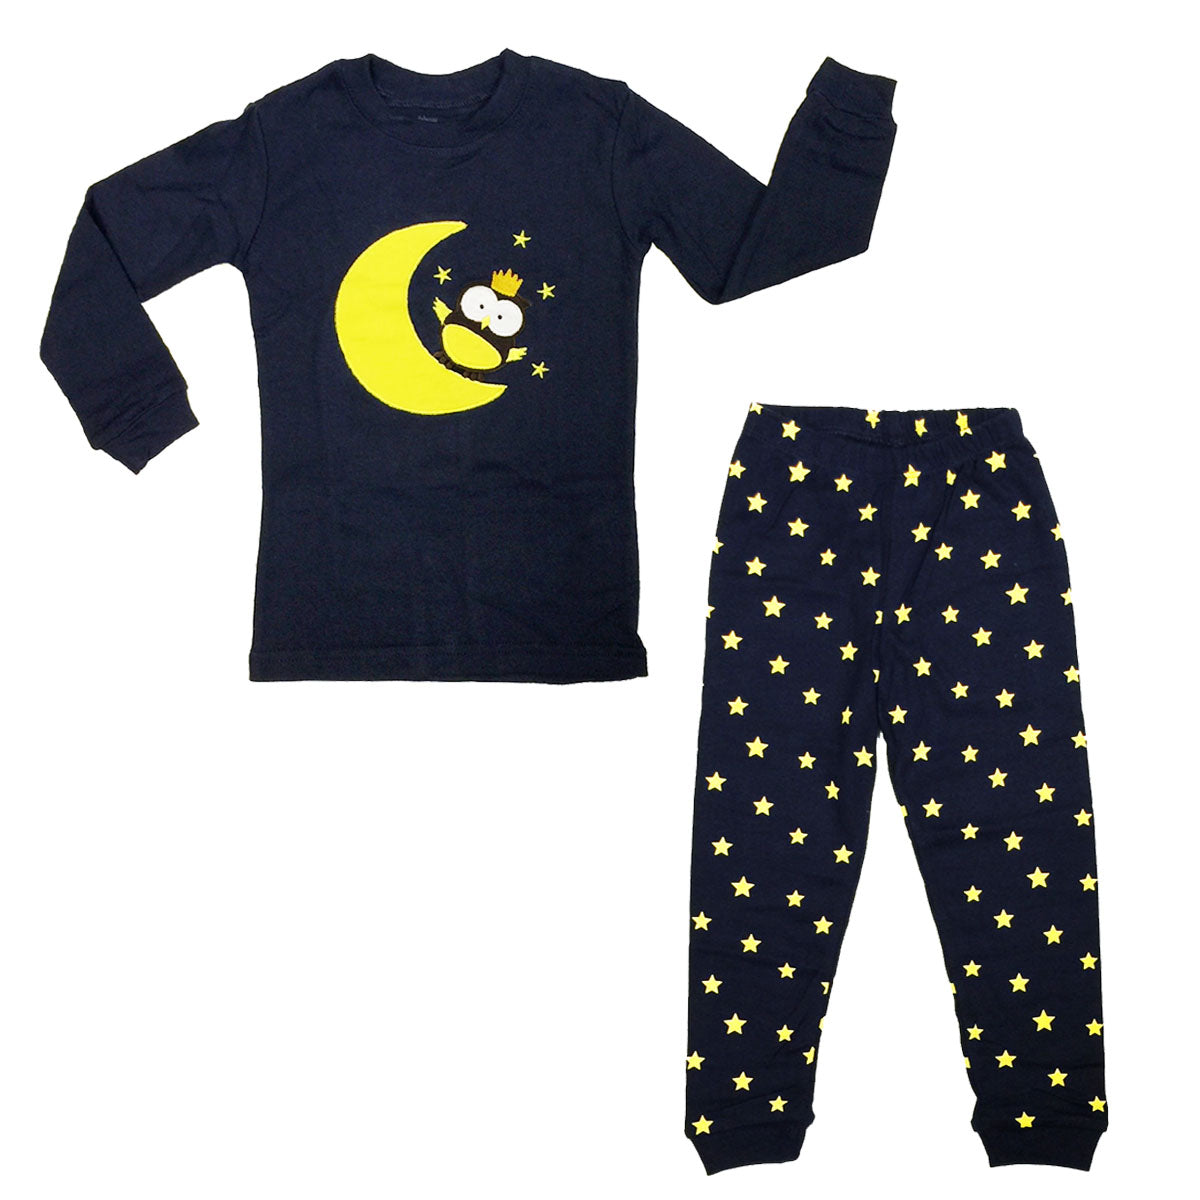 Dabuyu Moon & Owl Children's Pajamas